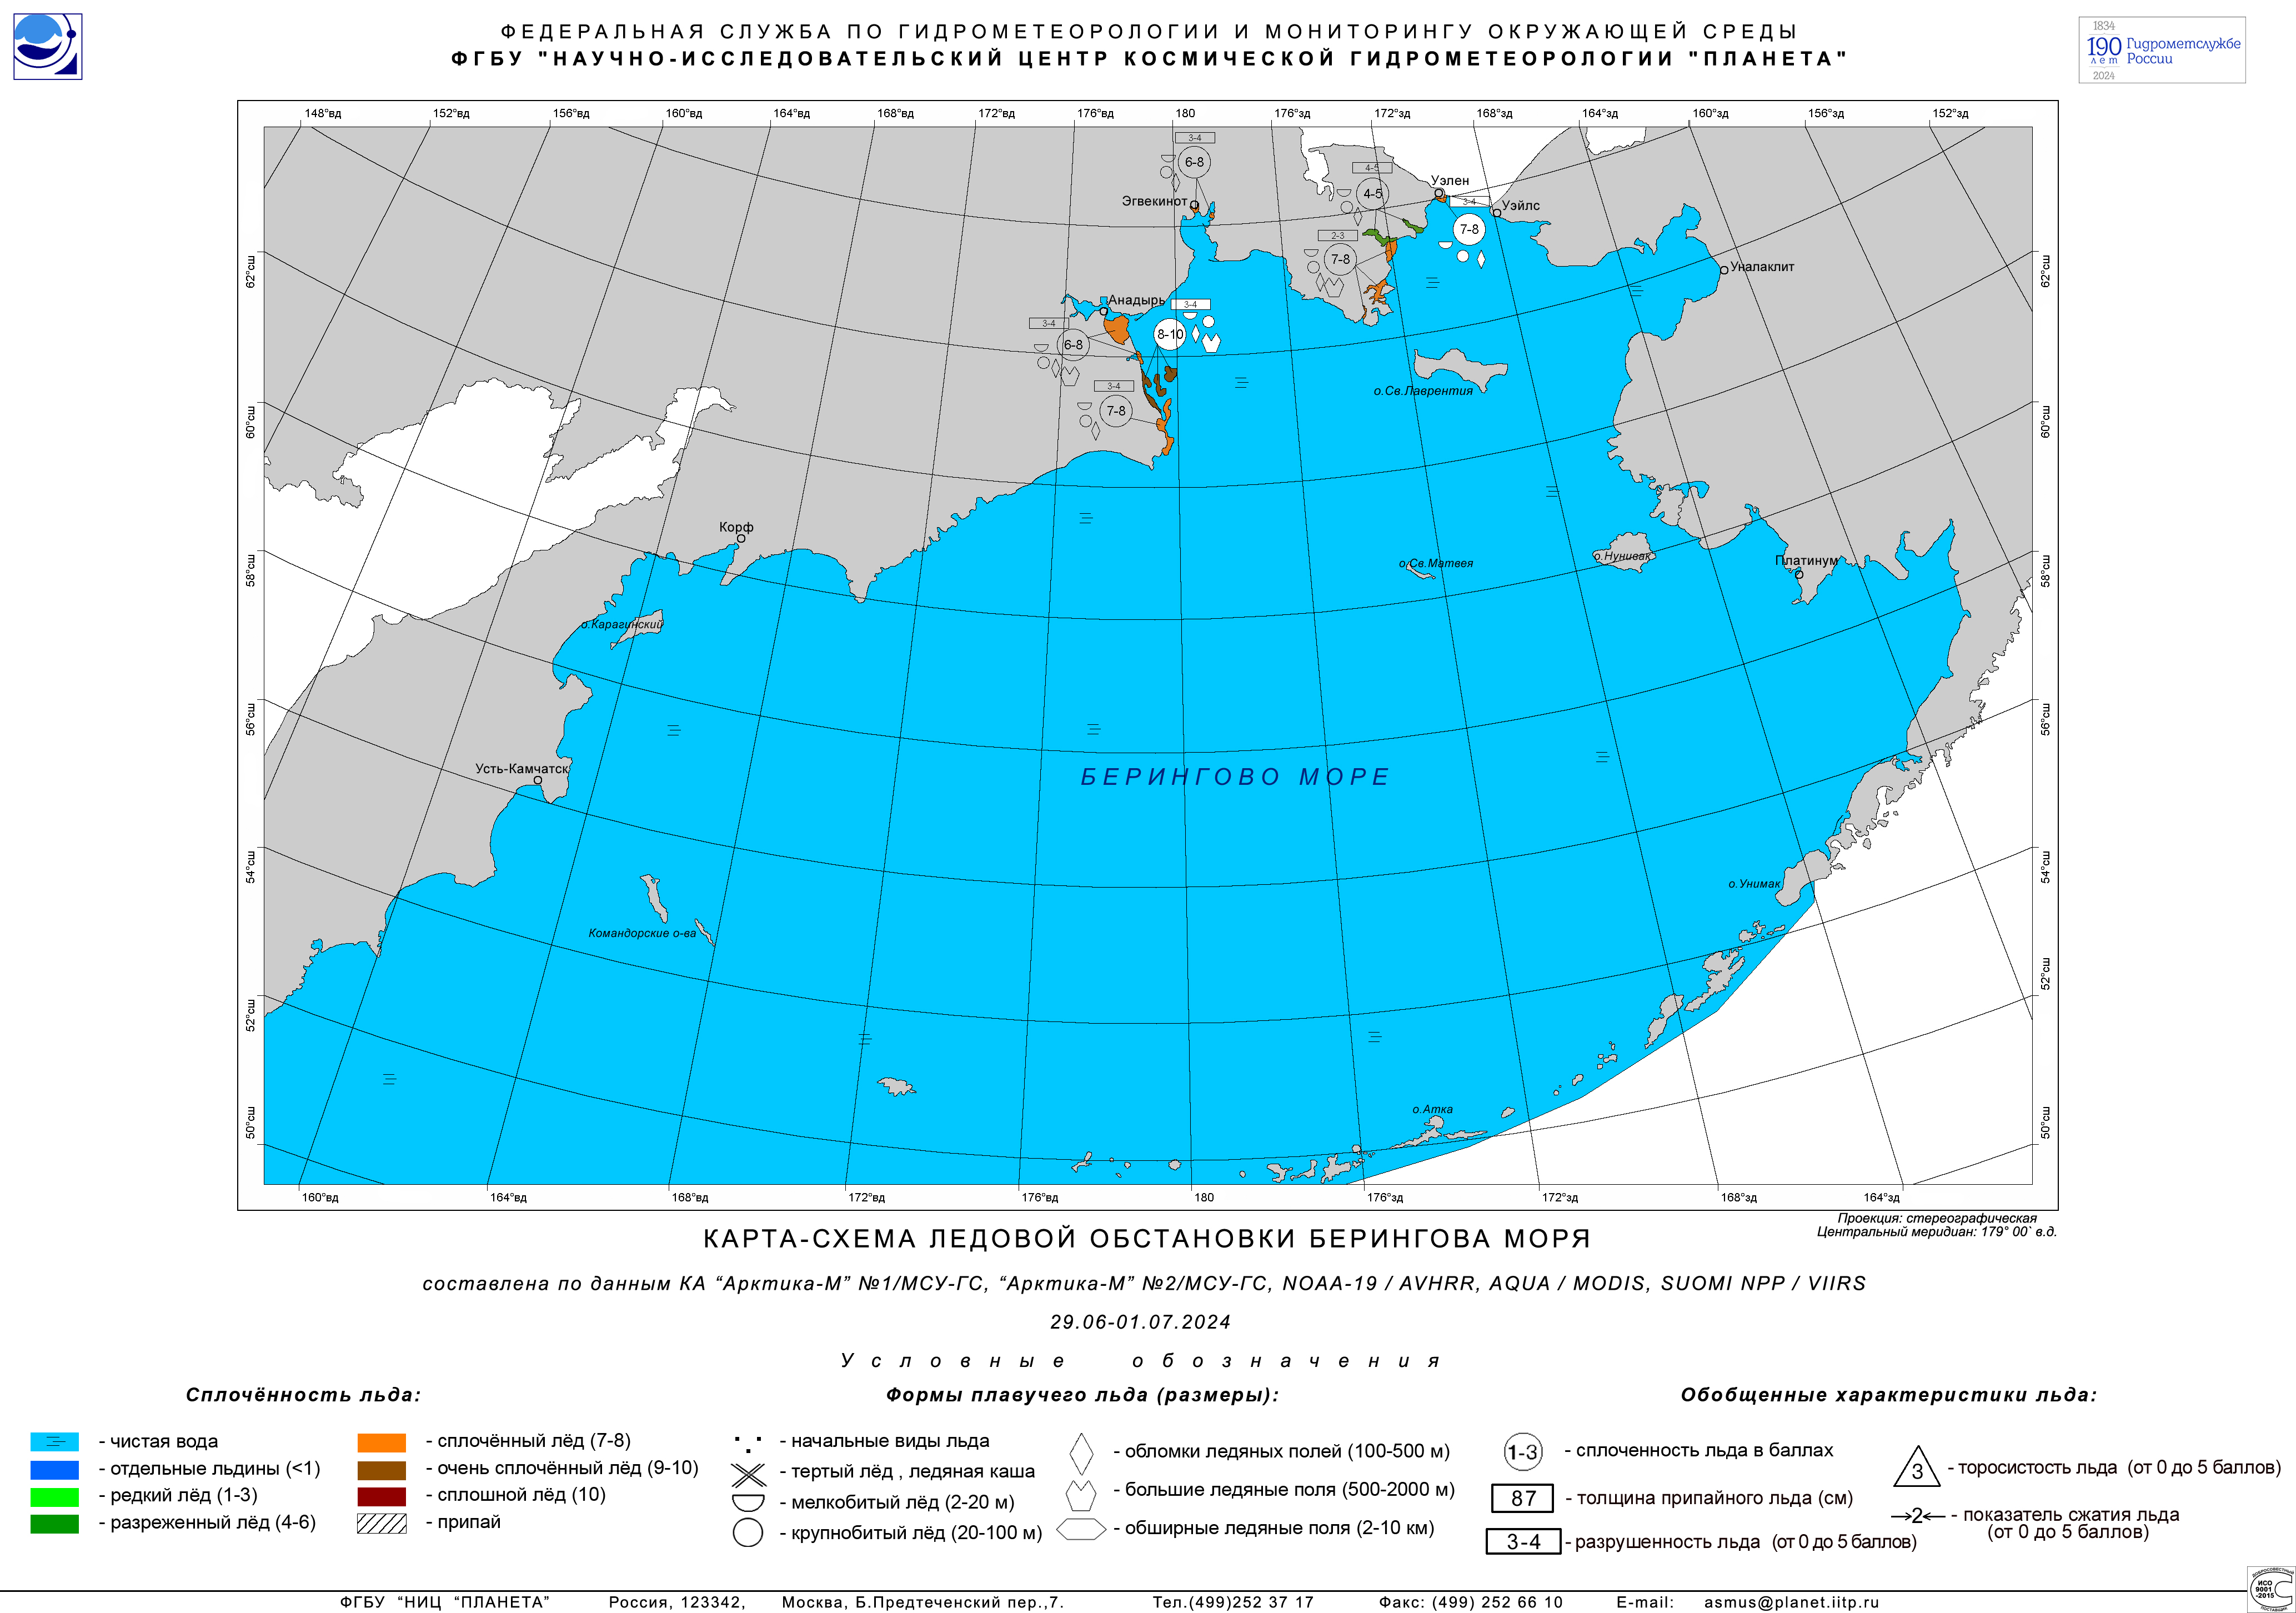 Ice map of Bering Sea